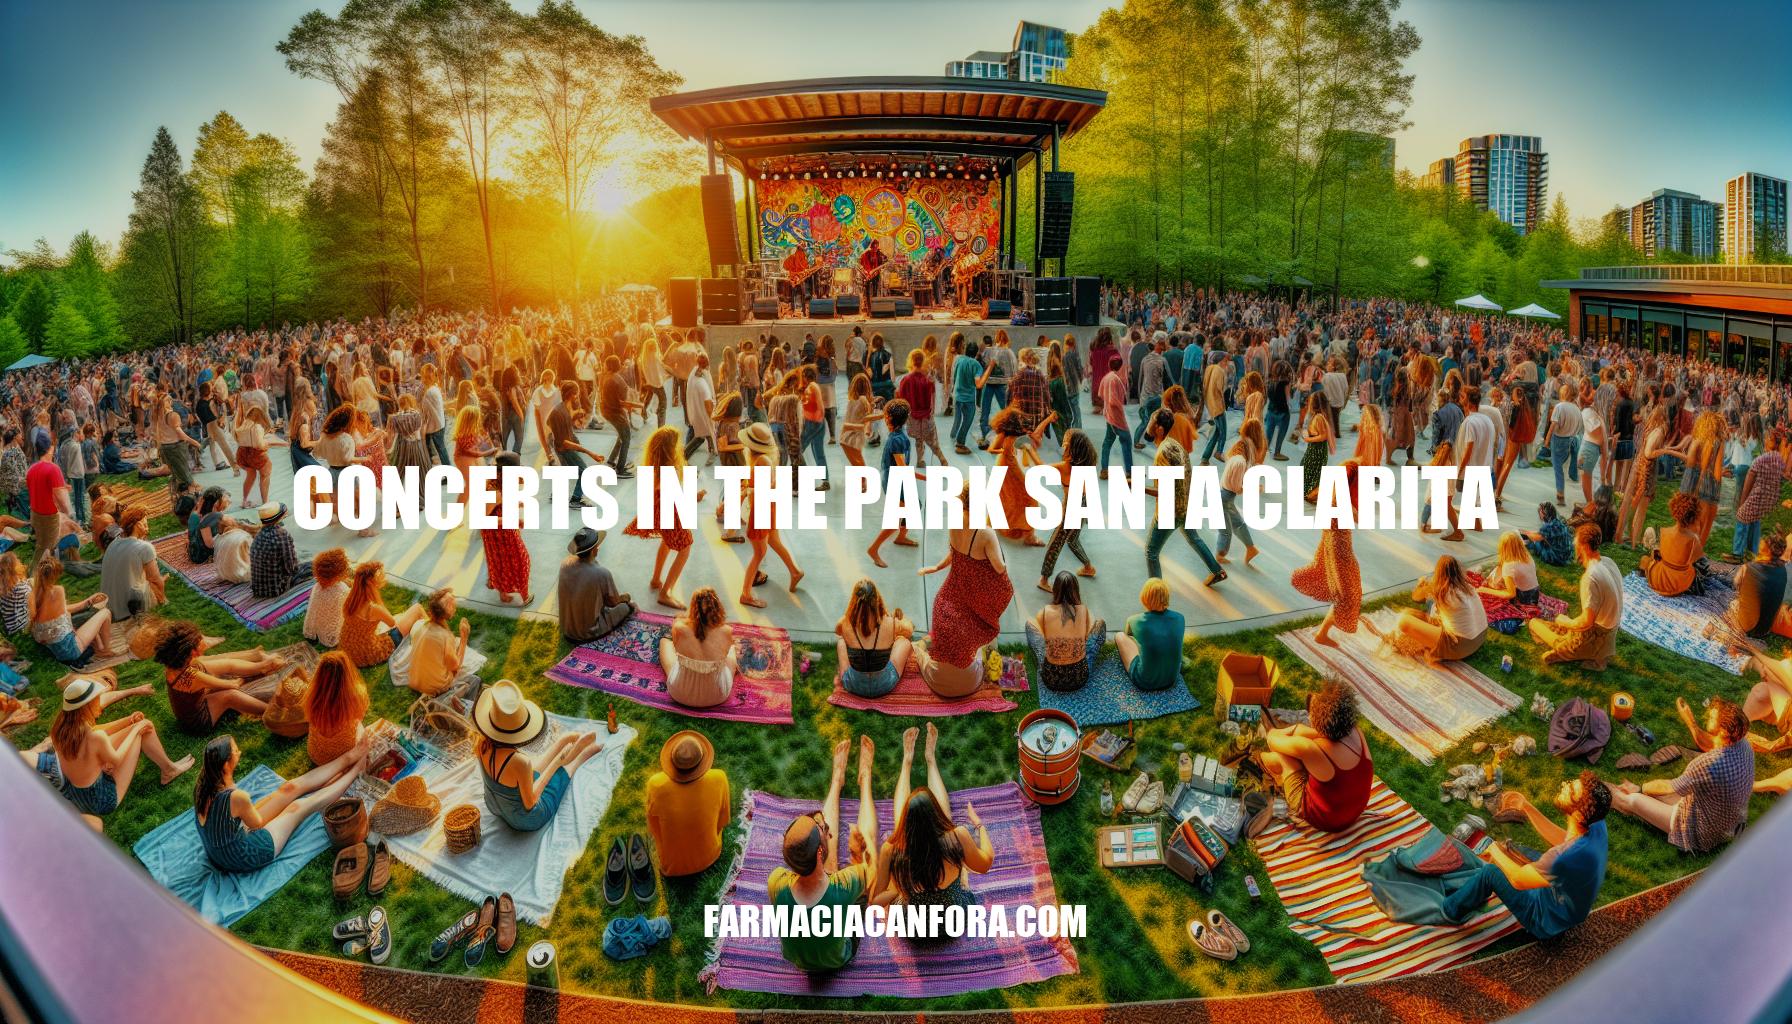 Concerts in the Park Santa Clarita: Music, Community & Fun